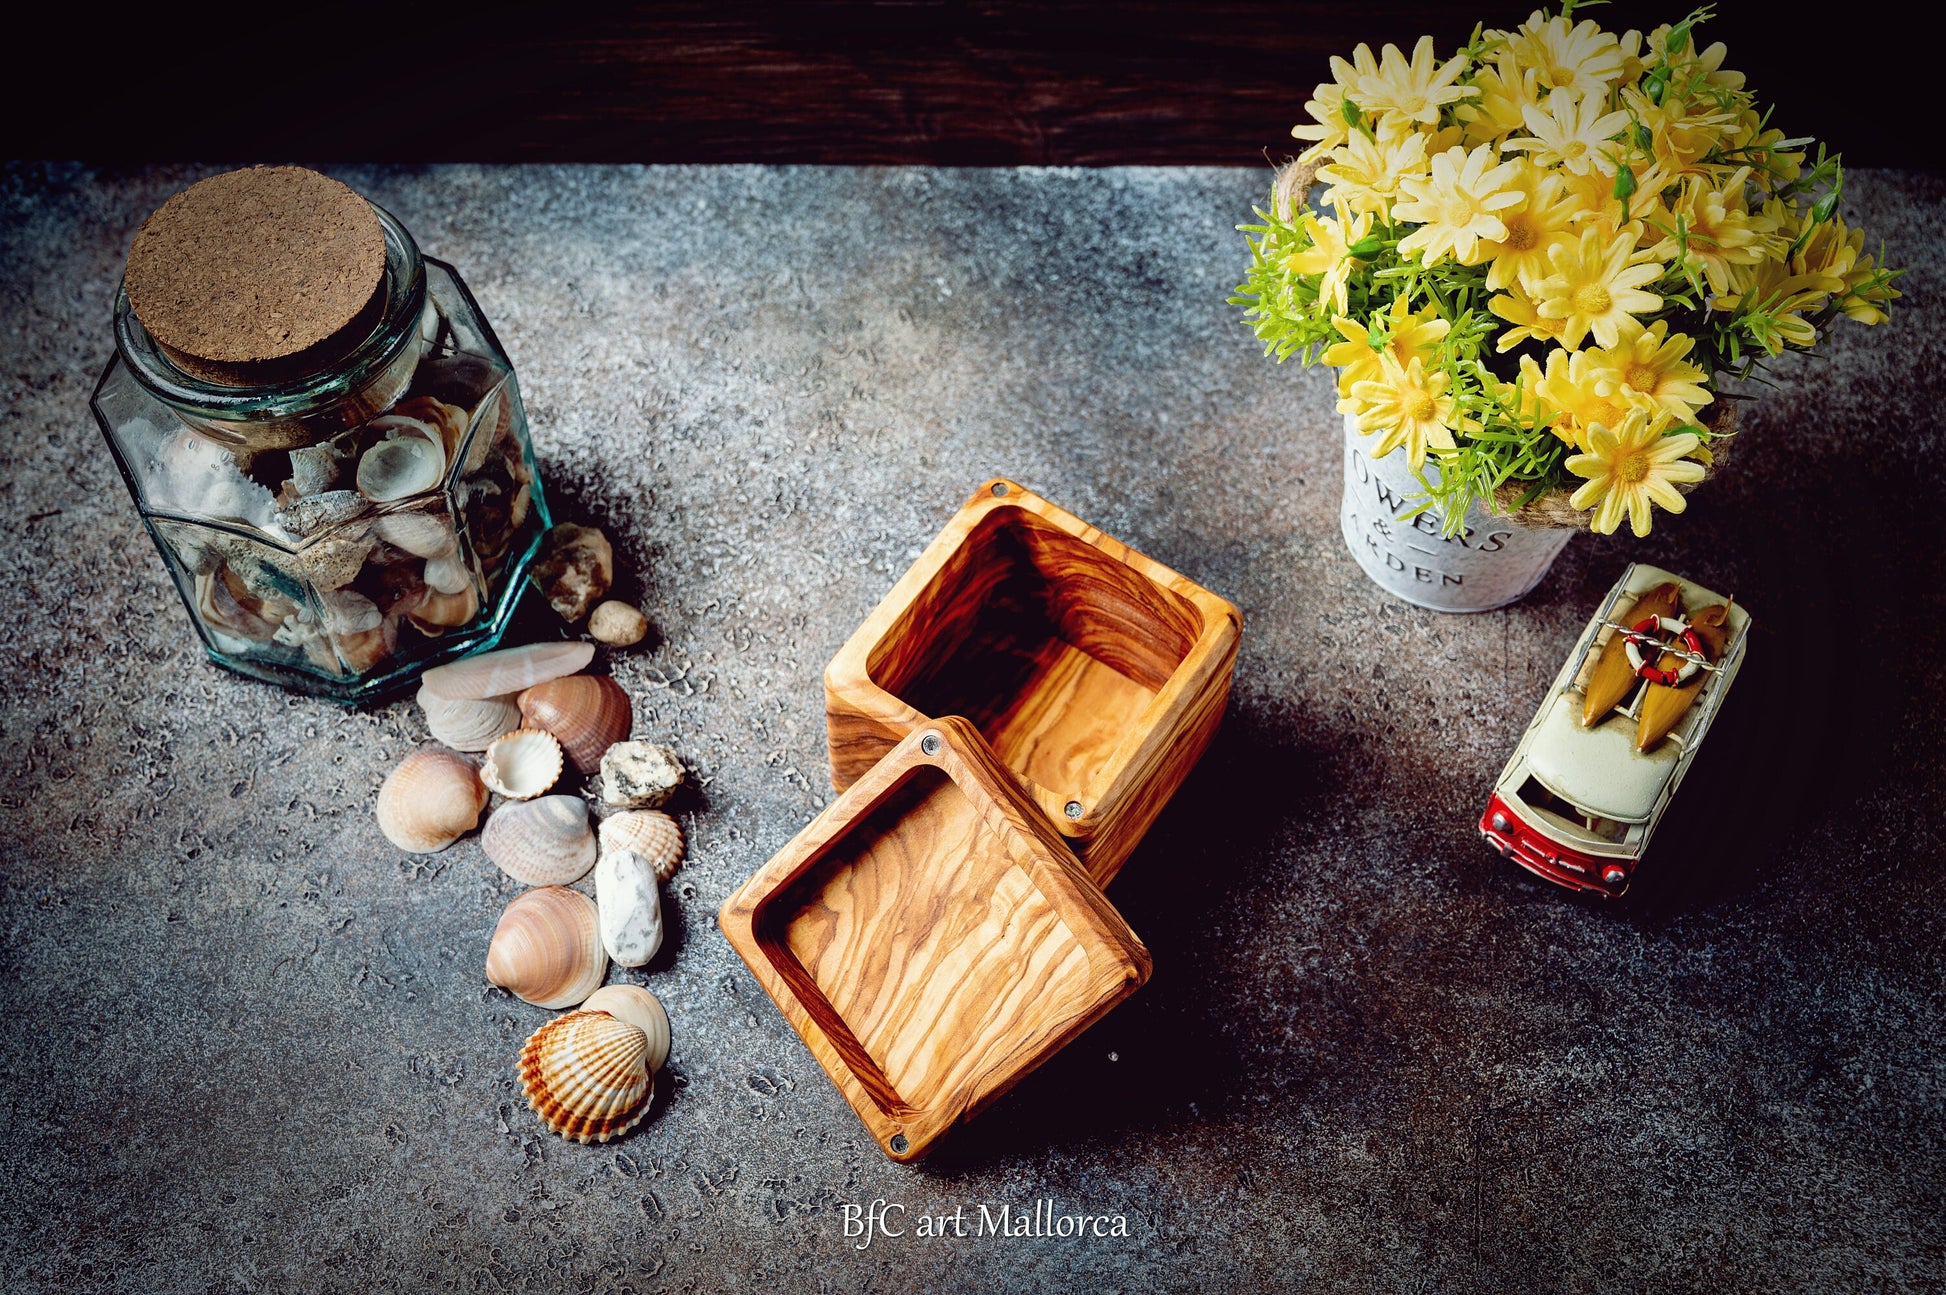 Olive Wood Salt Cellar With Lid, Salt shaker with Magnetic lid and Spoon Salt, Salt Container Lid Vintage and Sugar, Wood Salt Cellar Pinch